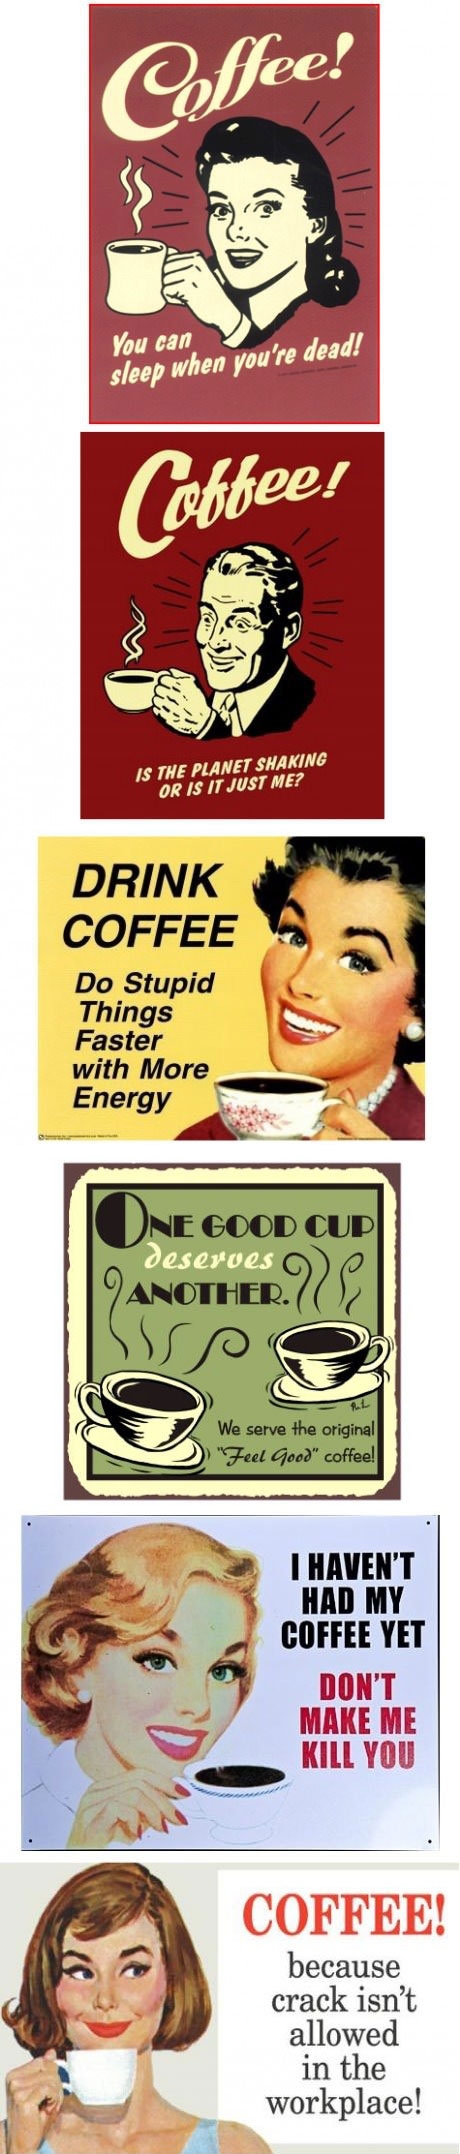 Coffee for everyone!